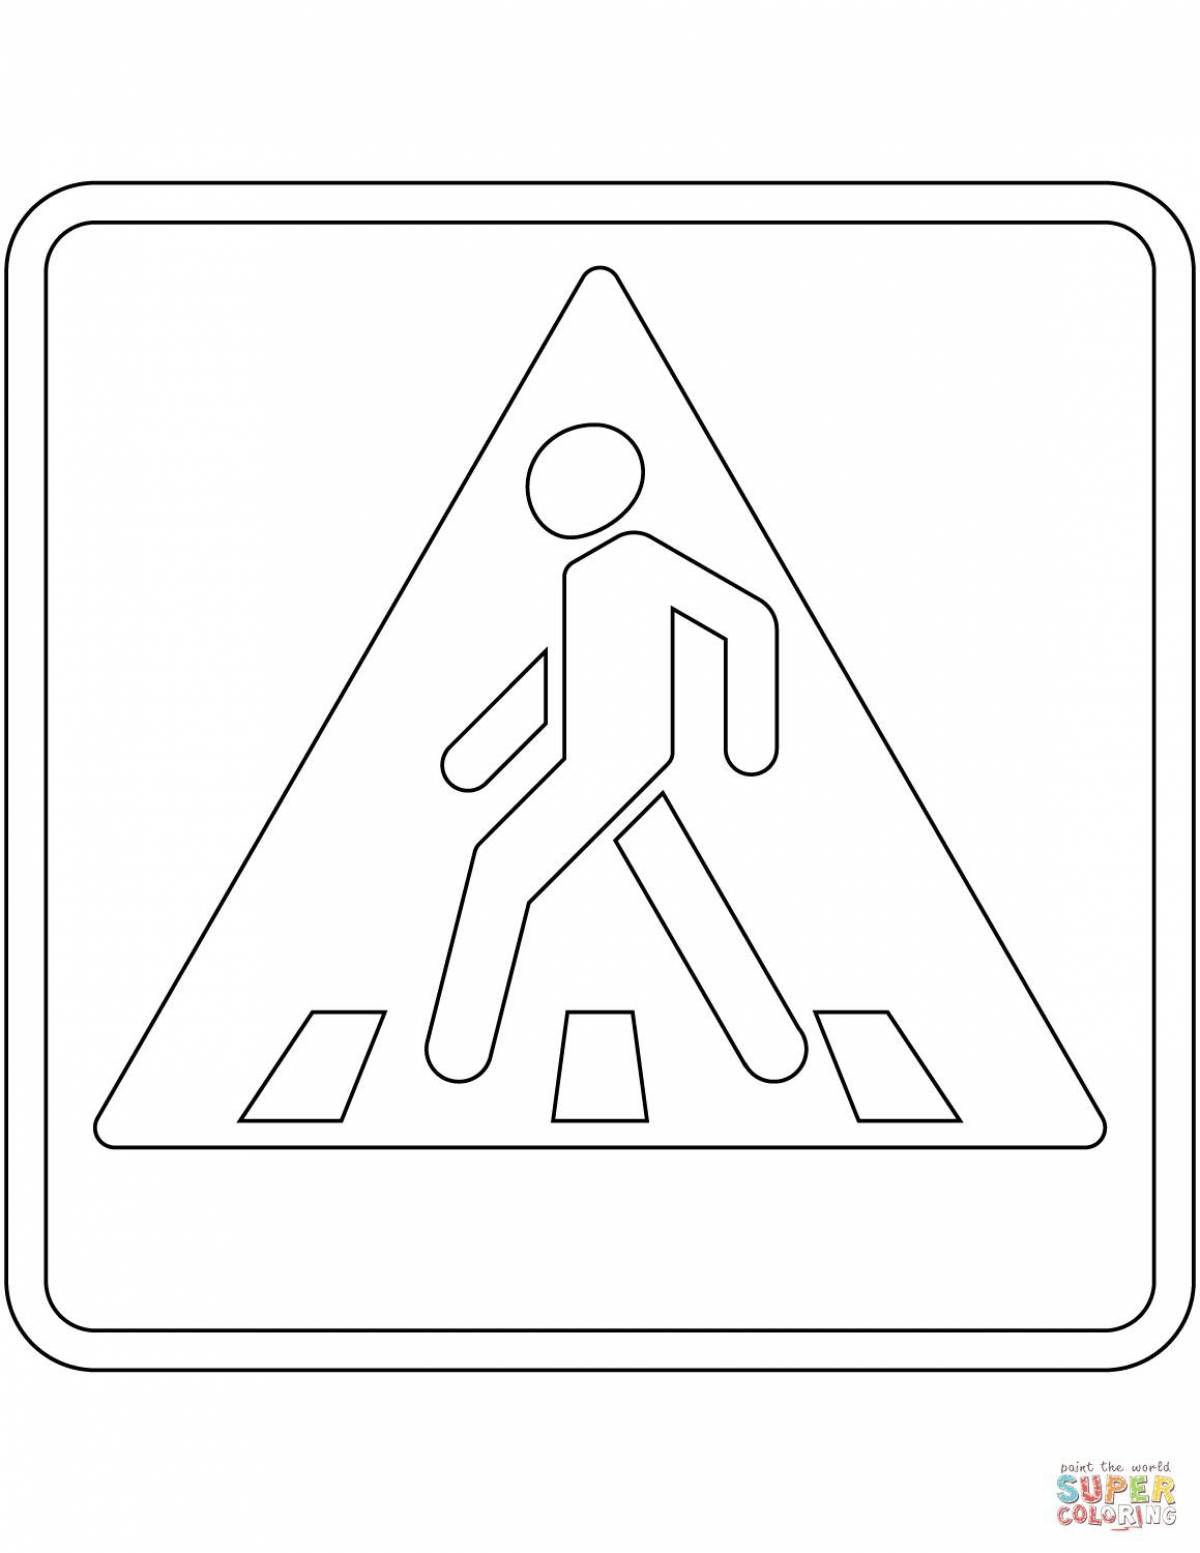 Pedestrian crossing #14